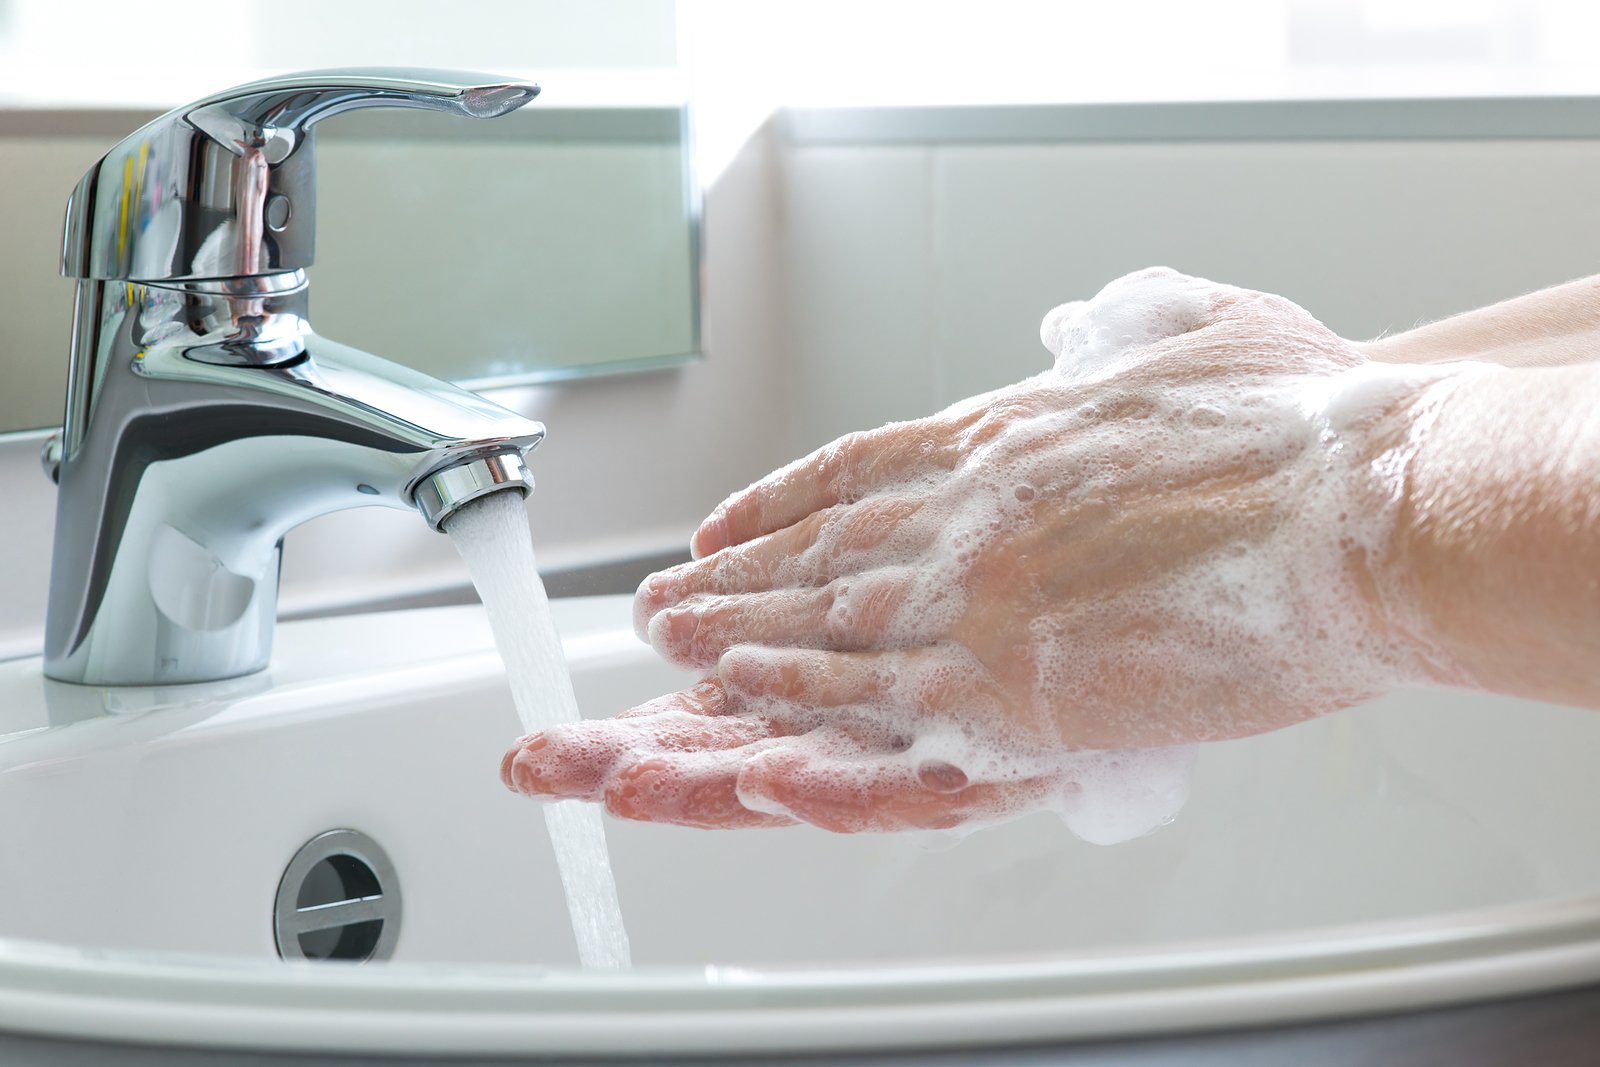 bigstock-Hygiene-Cleaning-Hands-Washi-74595562